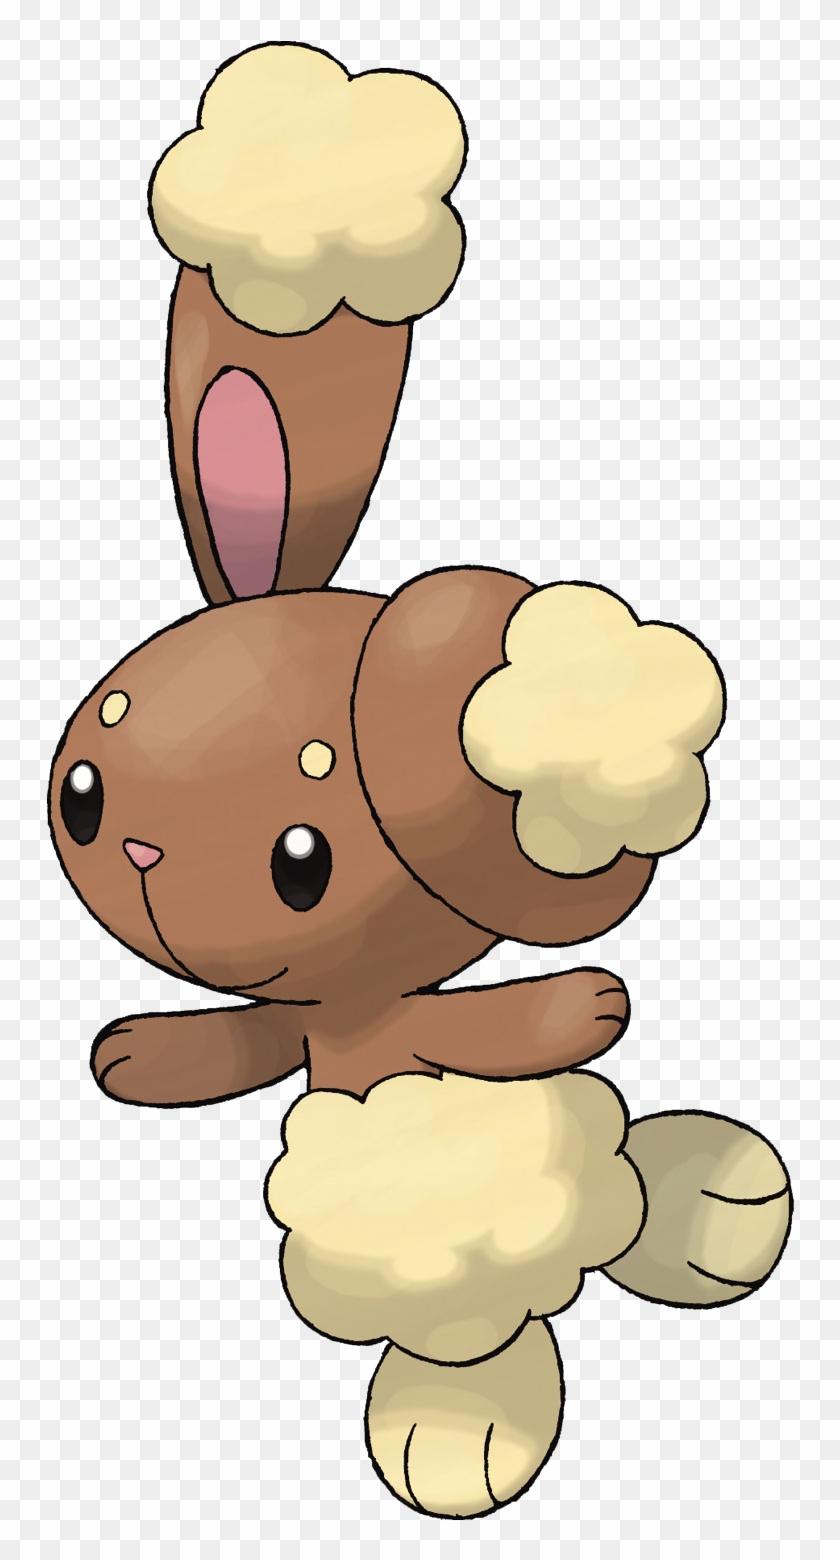 Buneary - Bunny Pokemon #1092593